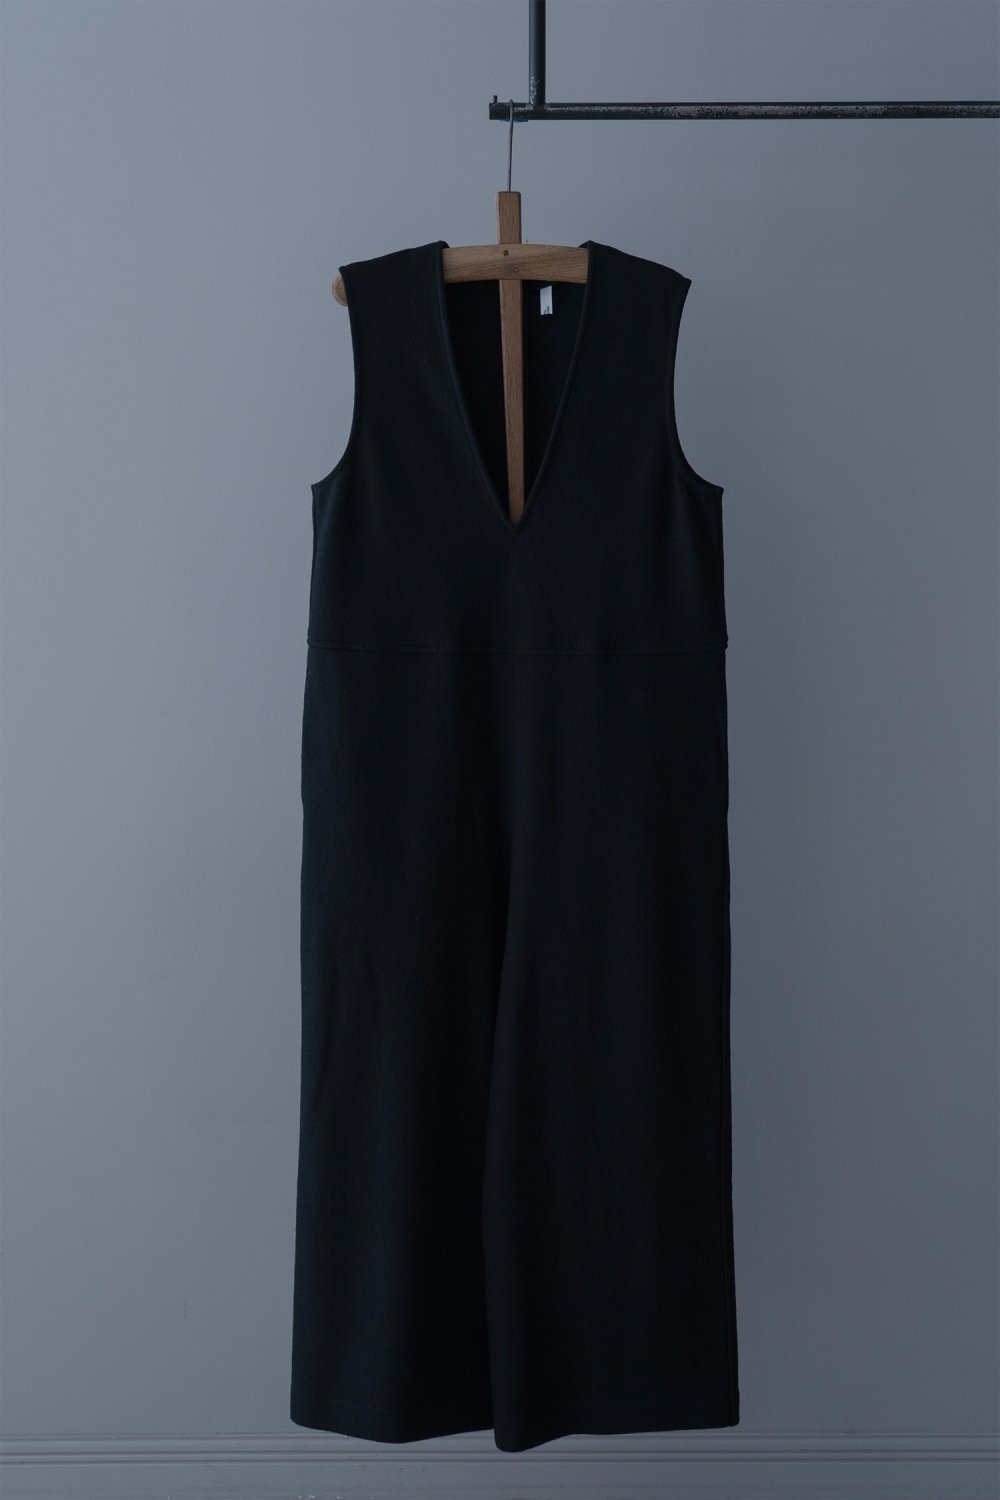 UNIVERSAL TISSU Wool Compression Jersey Overalls Black 